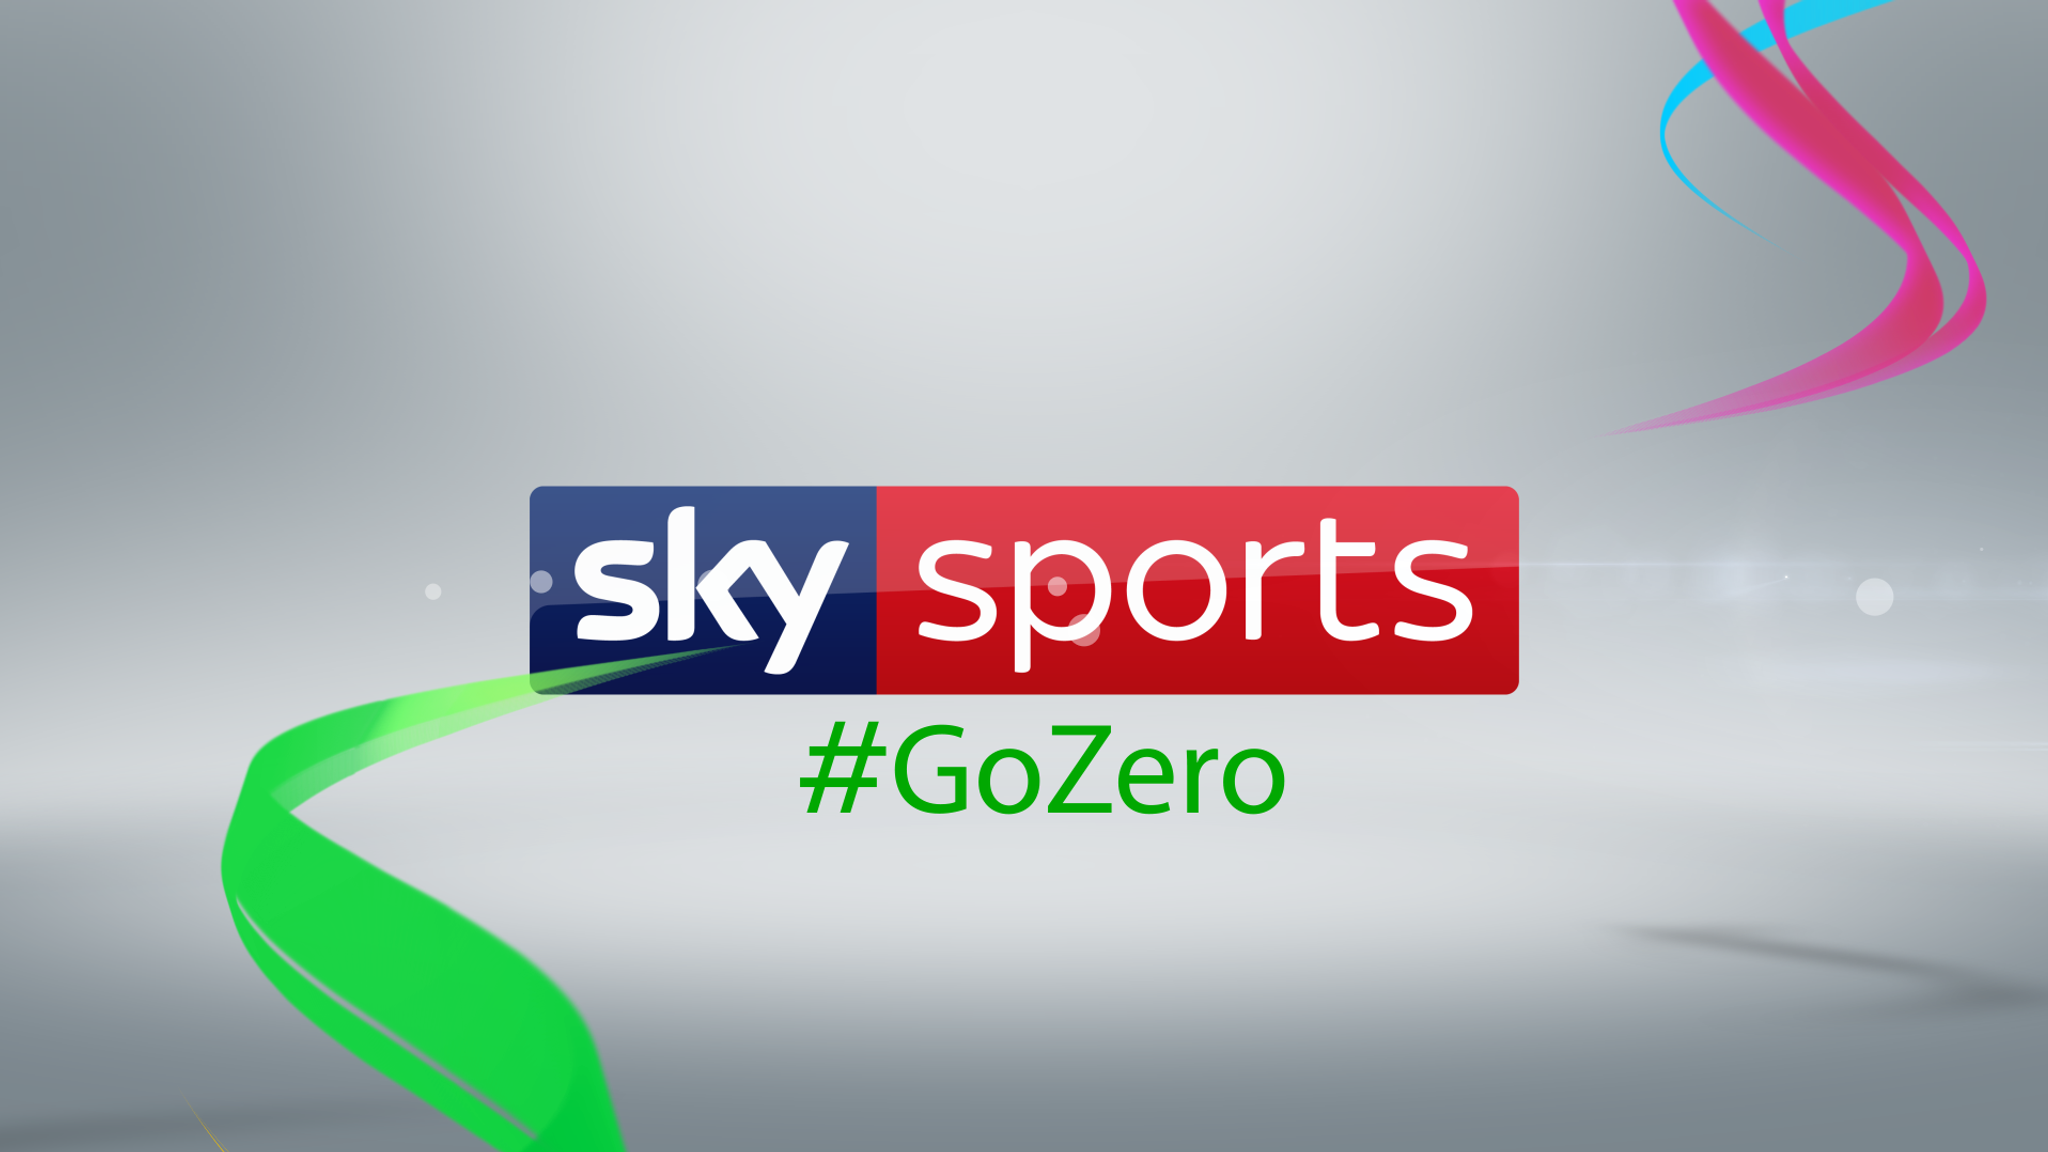 Sky Sports #GoZero campaign wins One Planet Award for Sustainability in Sports TV News Sky Sports